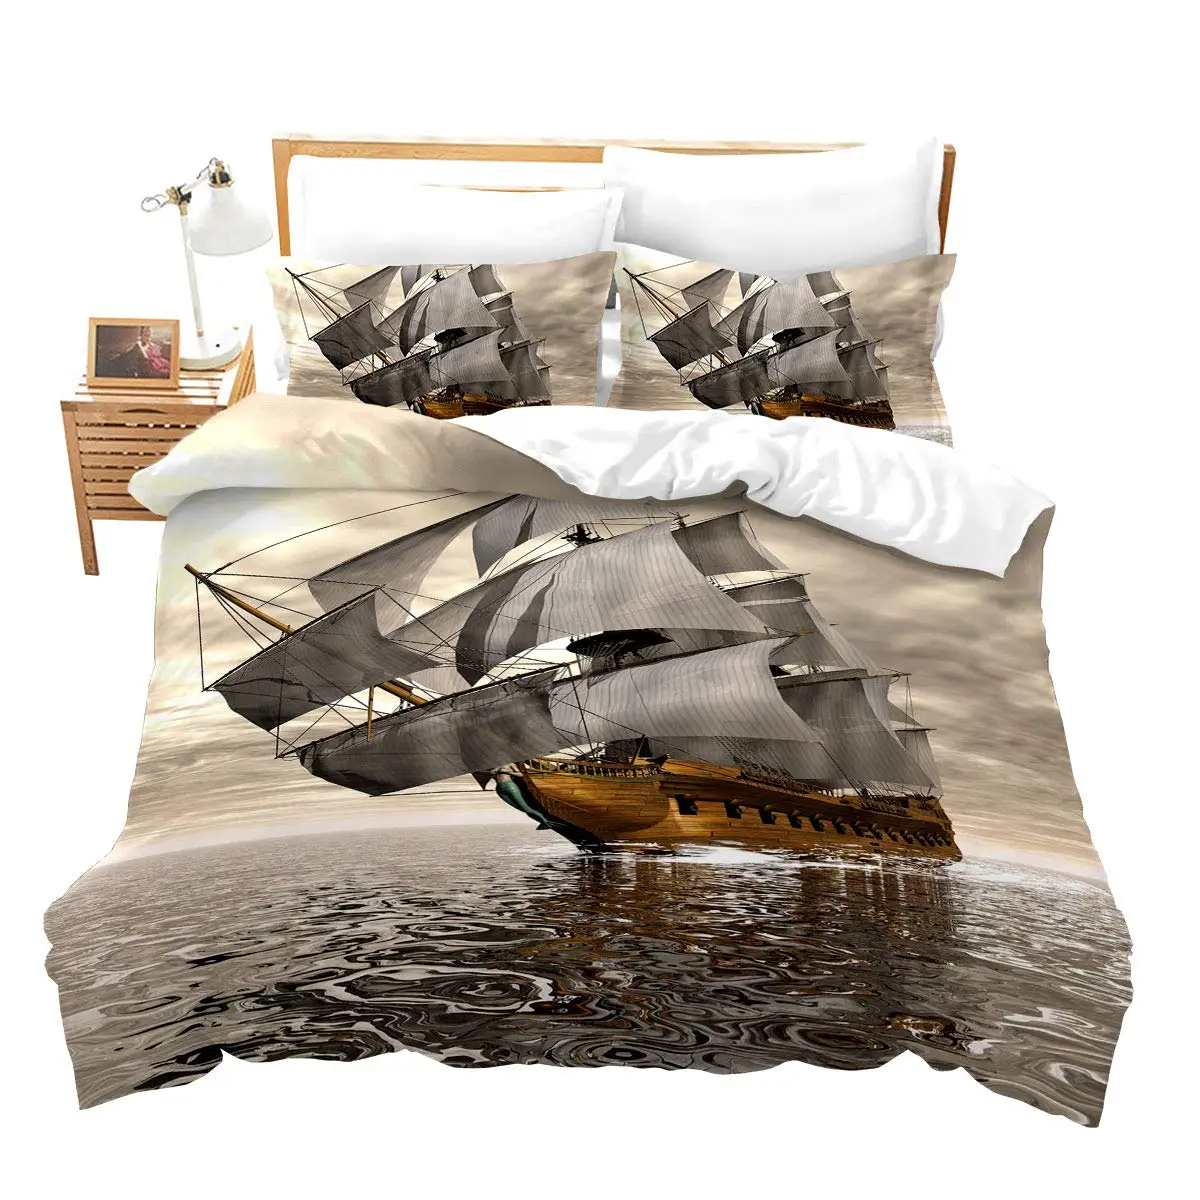 

Nautical Bedding Set Twin Size,Nautical Sailboat Bed for Boys Teens,Ocean Sailing Anchor Comforter Cover 3 Pieces Room Decor